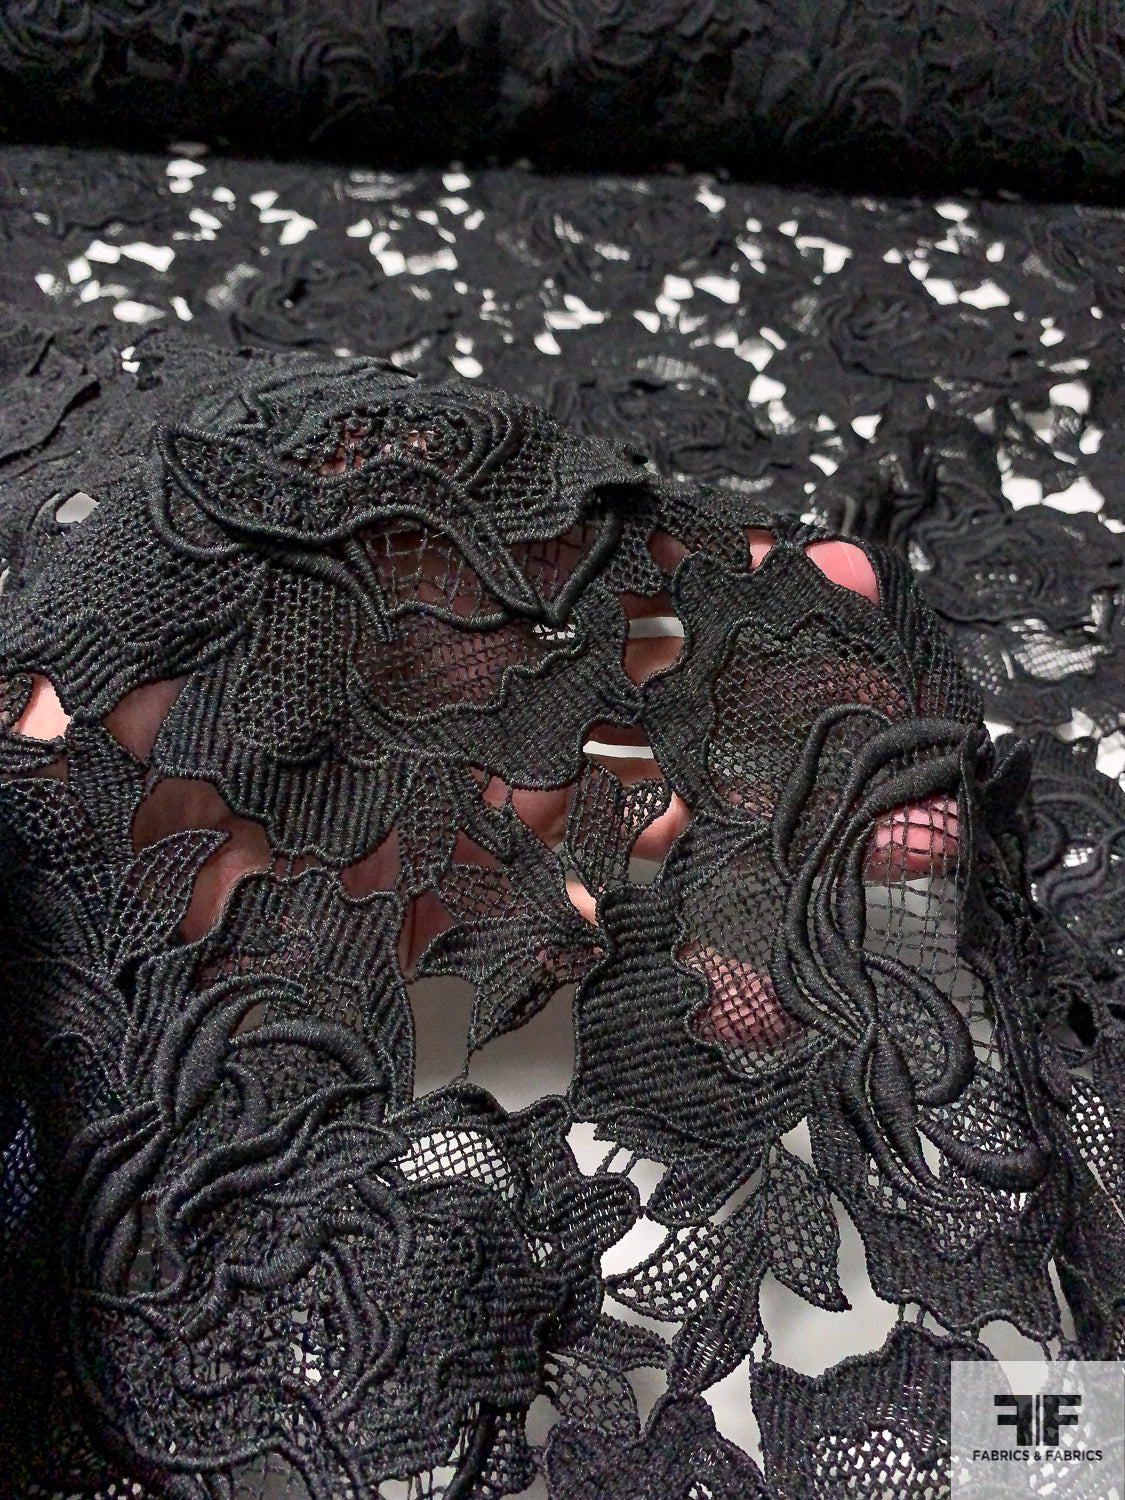 Black Scalloped Guipure Lace - Fabrics & Fabrics